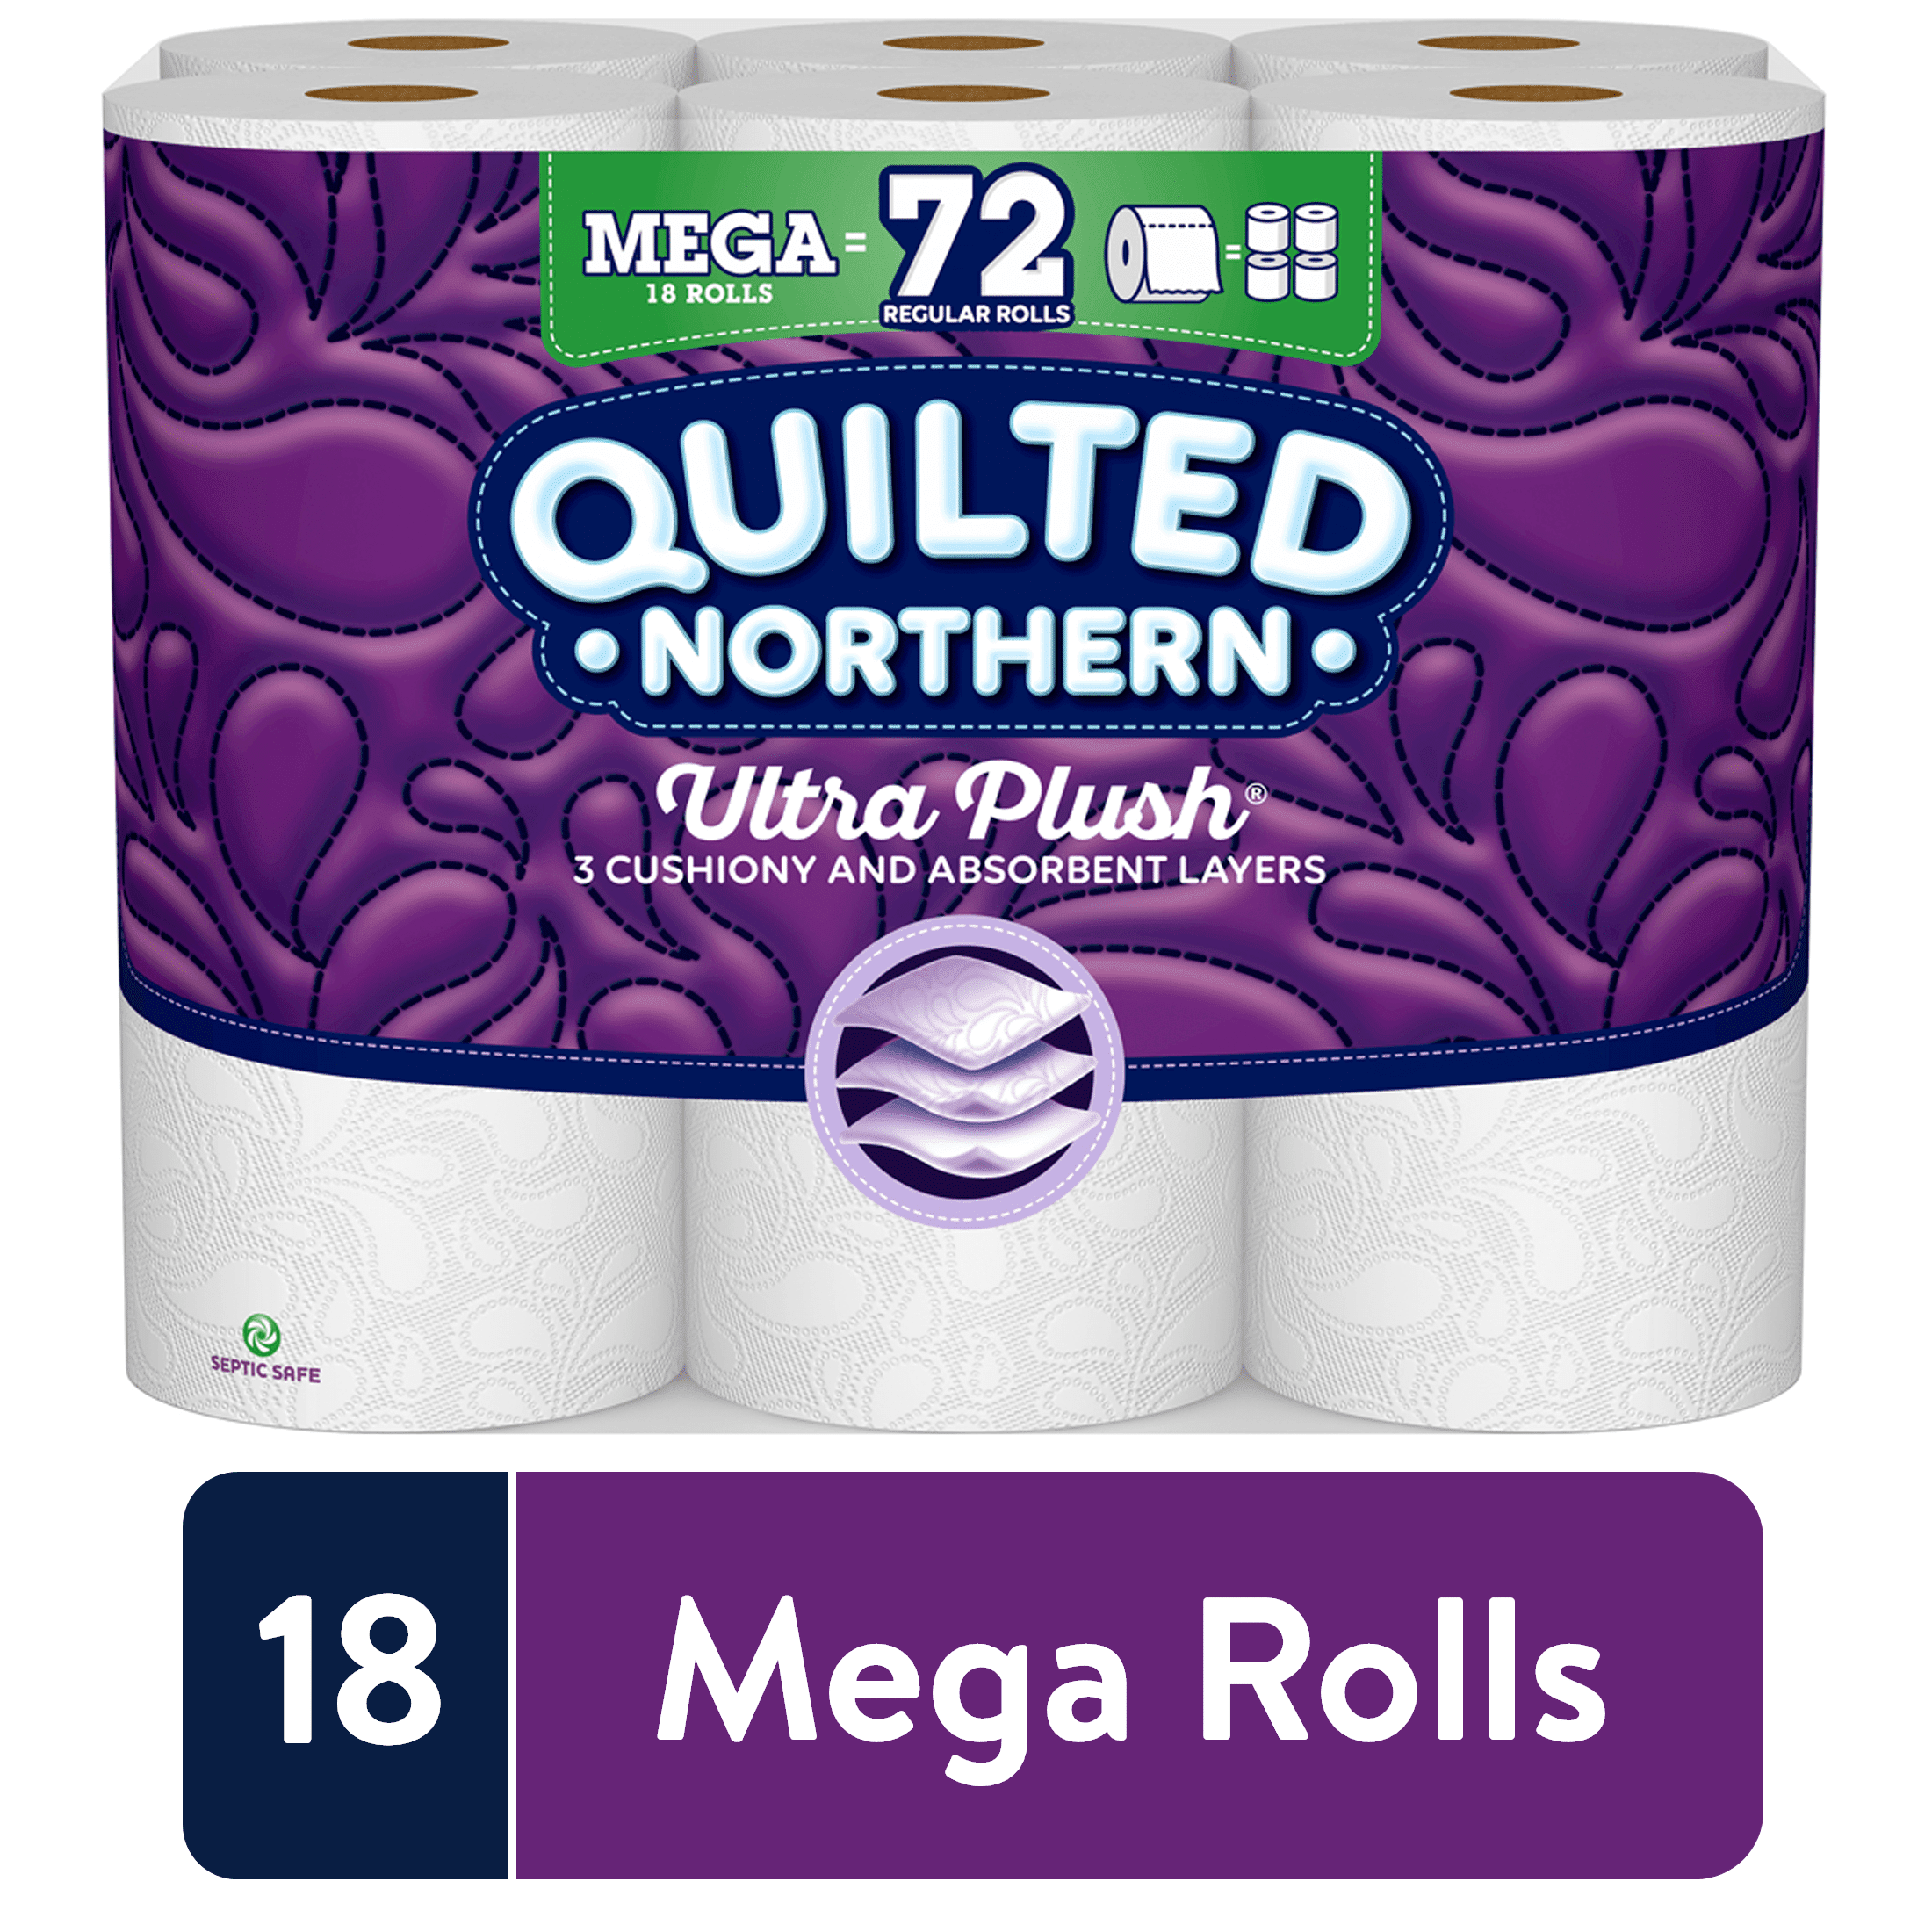 Quilted Northern Ultra Plush Bath Tissue - 18 Rolls